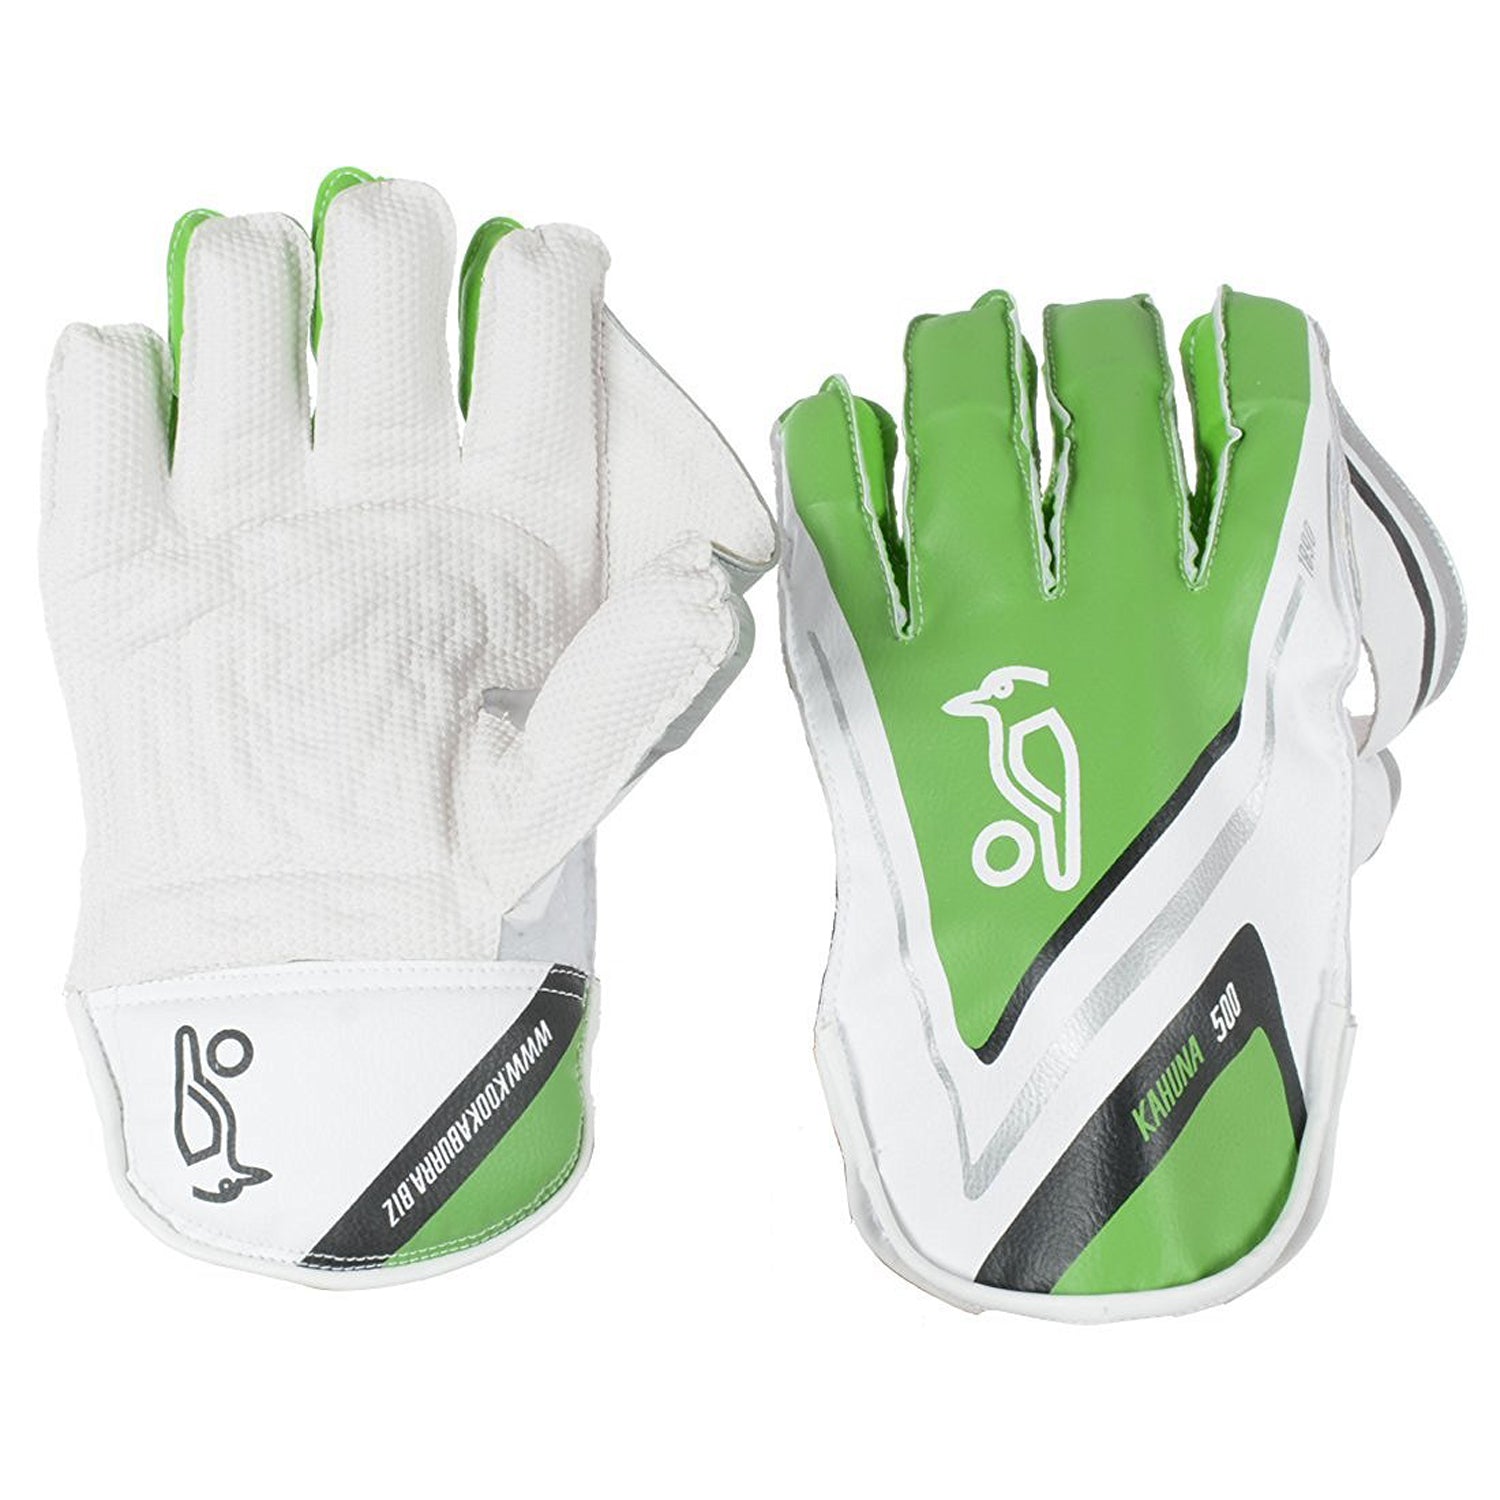 Kookaburra Kahuna Pro 500 Wicket Keeping Gloves - Best Price online Prokicksports.com